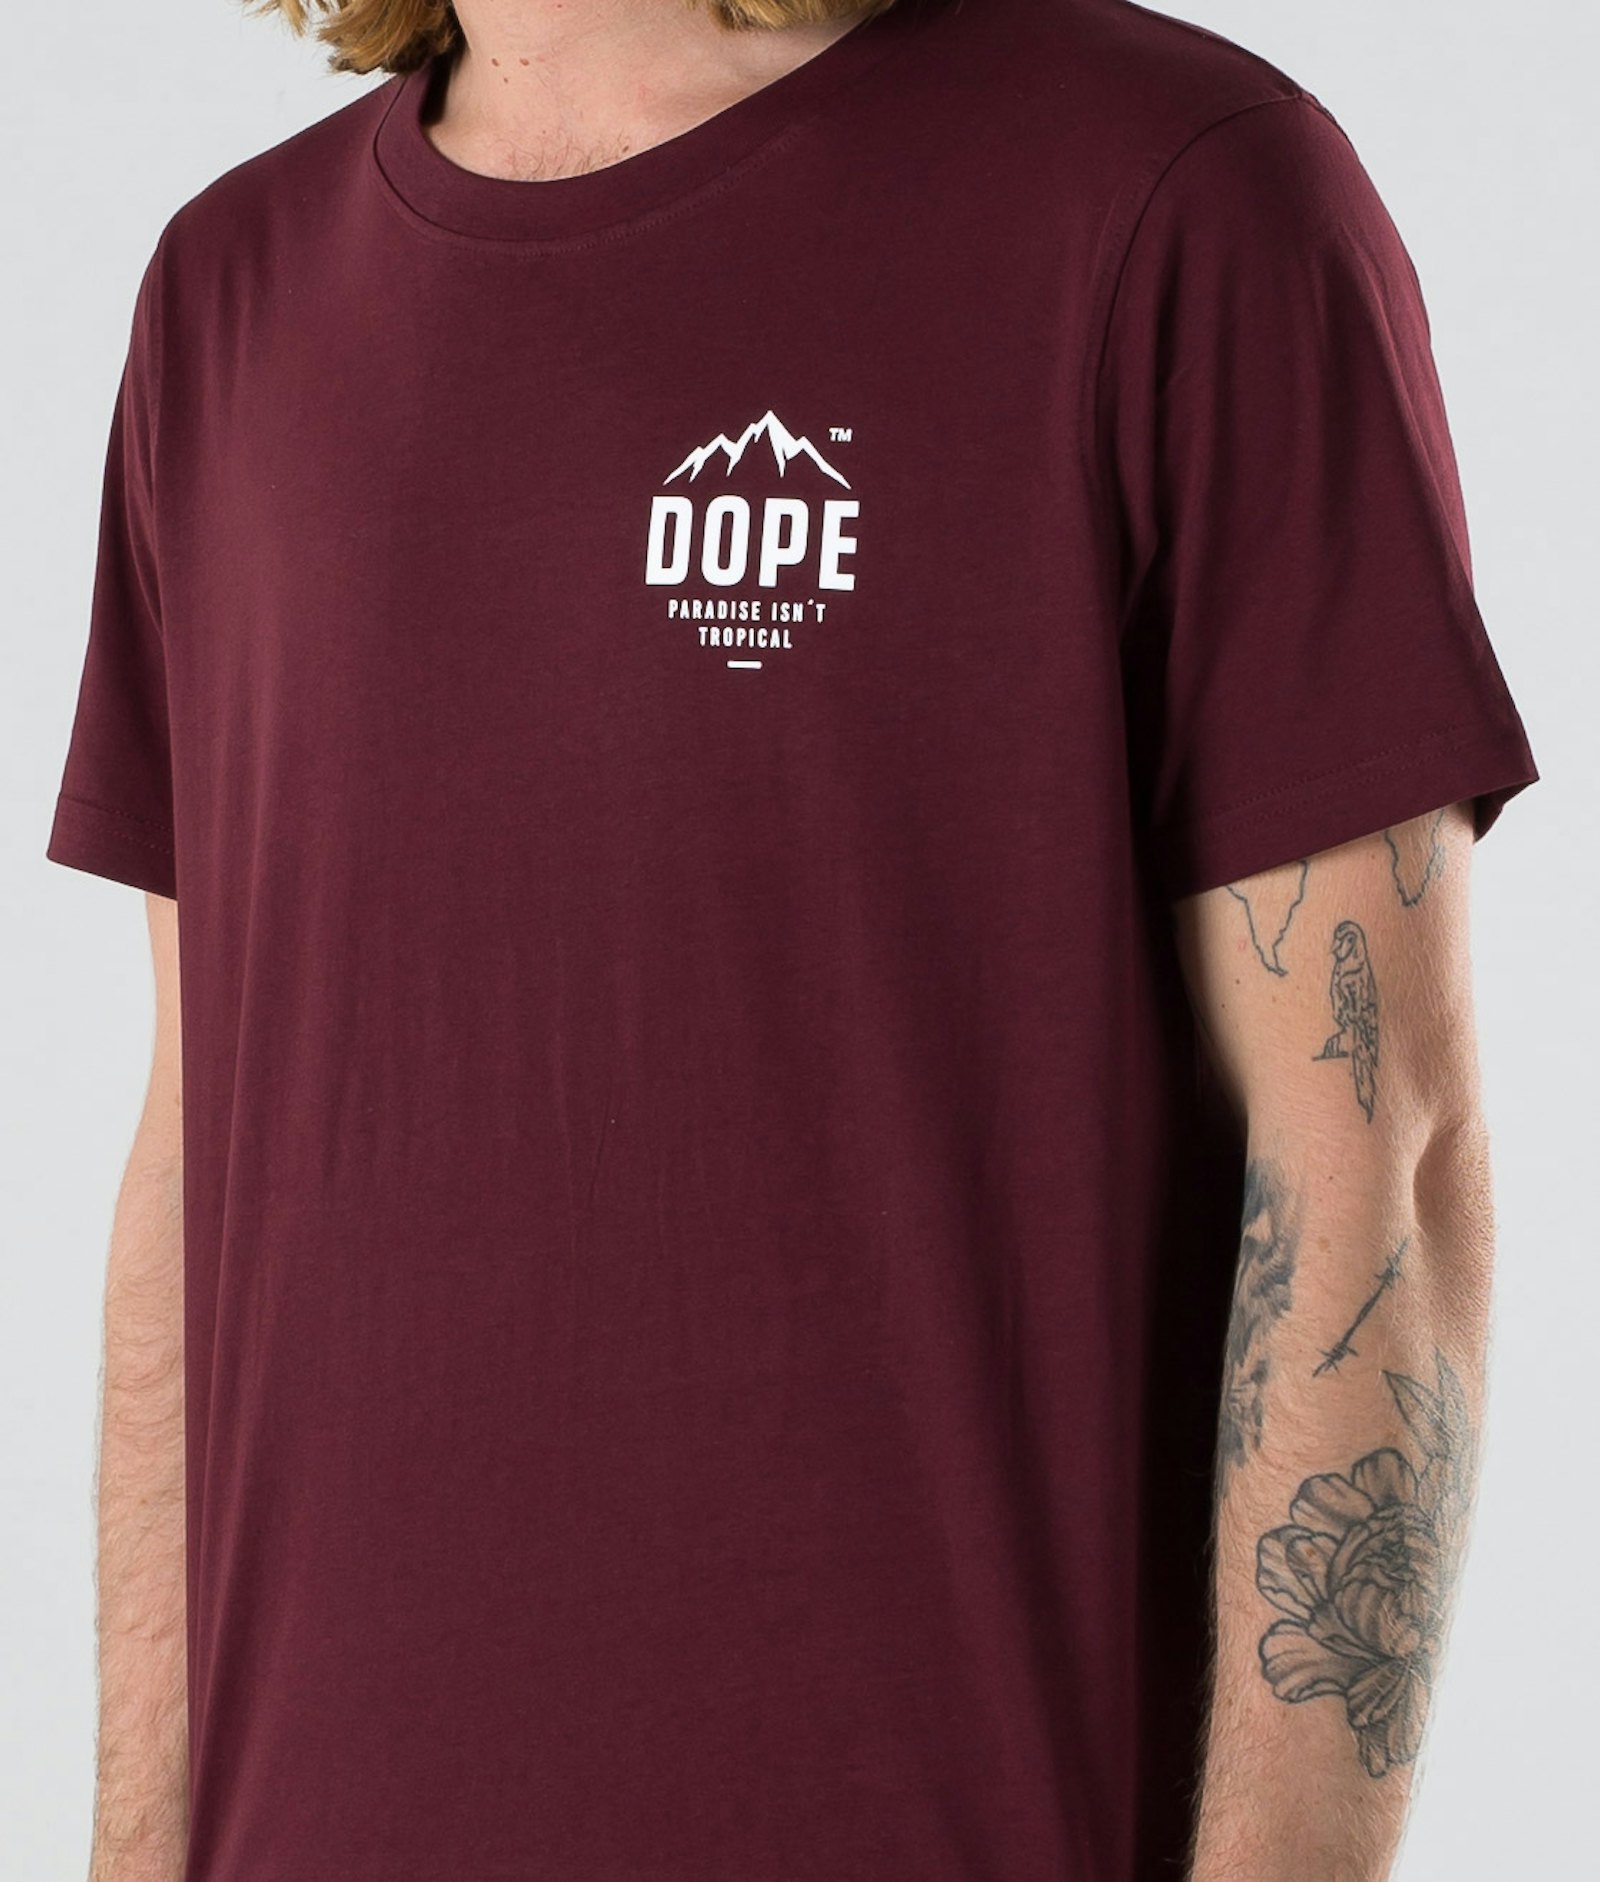 Dope Paradise II T-shirt Herr Burgundy